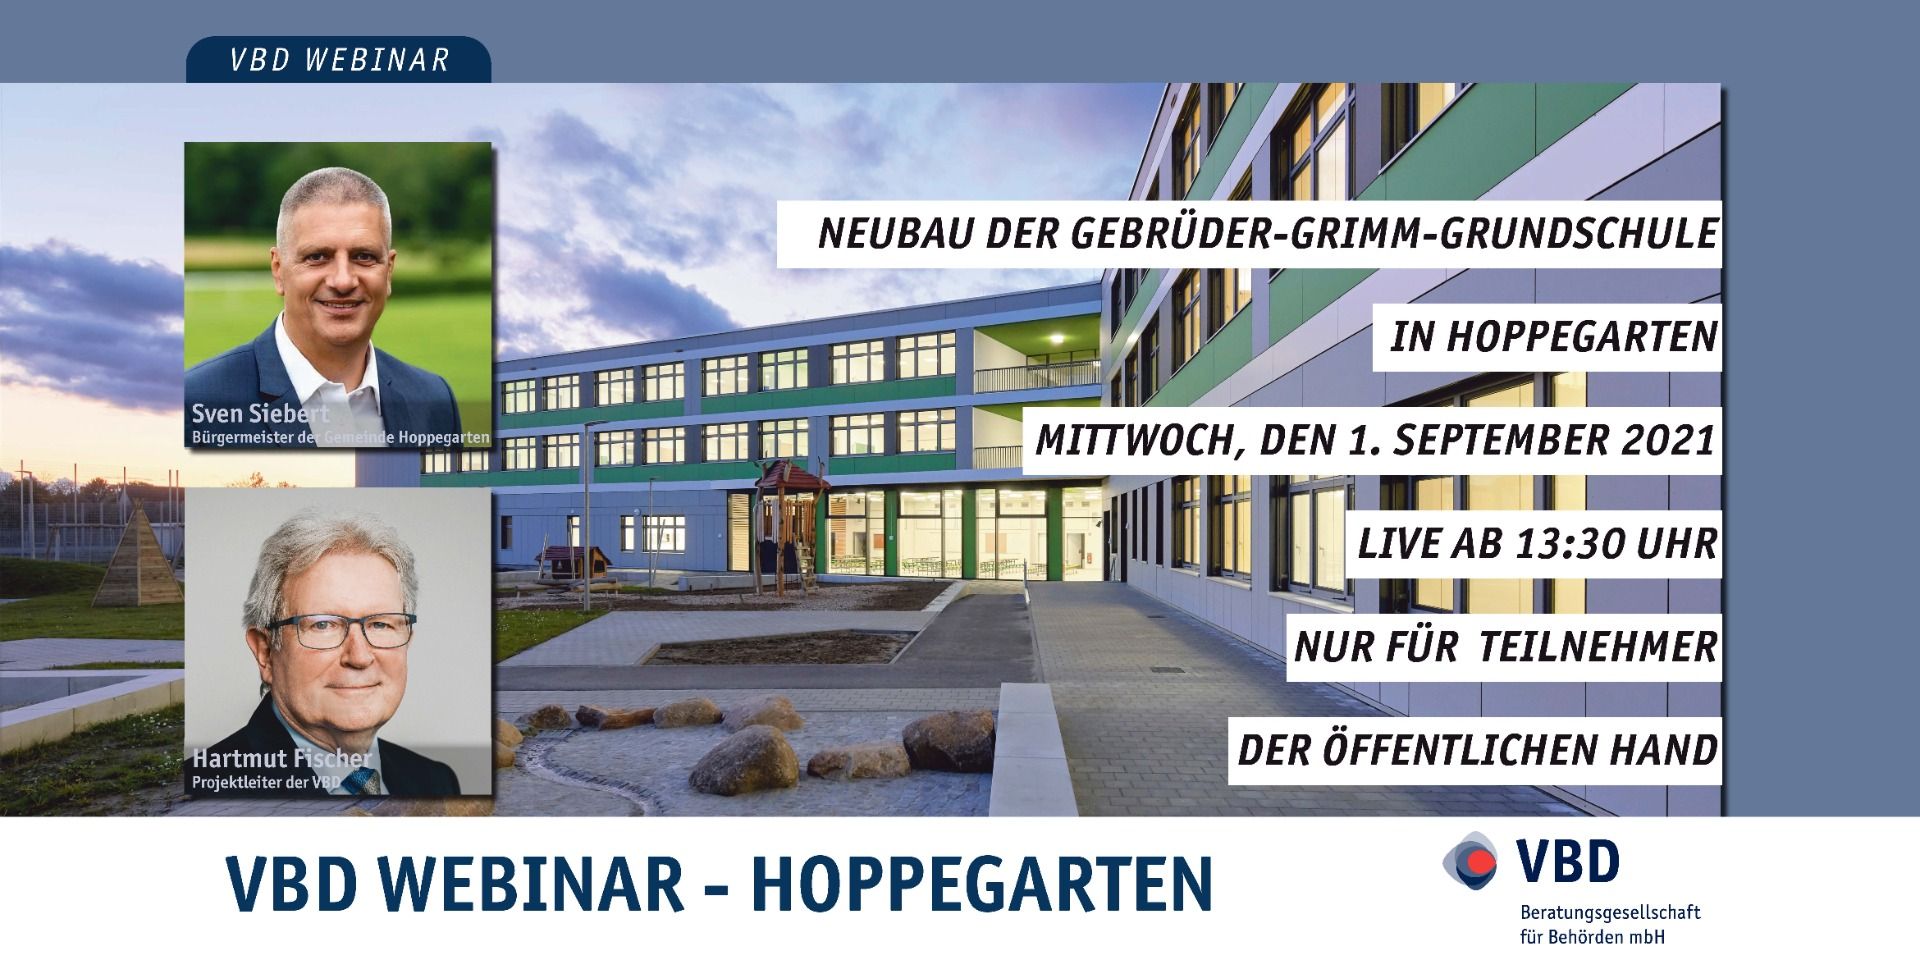 VBD-Webinar: Neubau der Gebrüder-Grimm-Grundschule in Hoppegarten